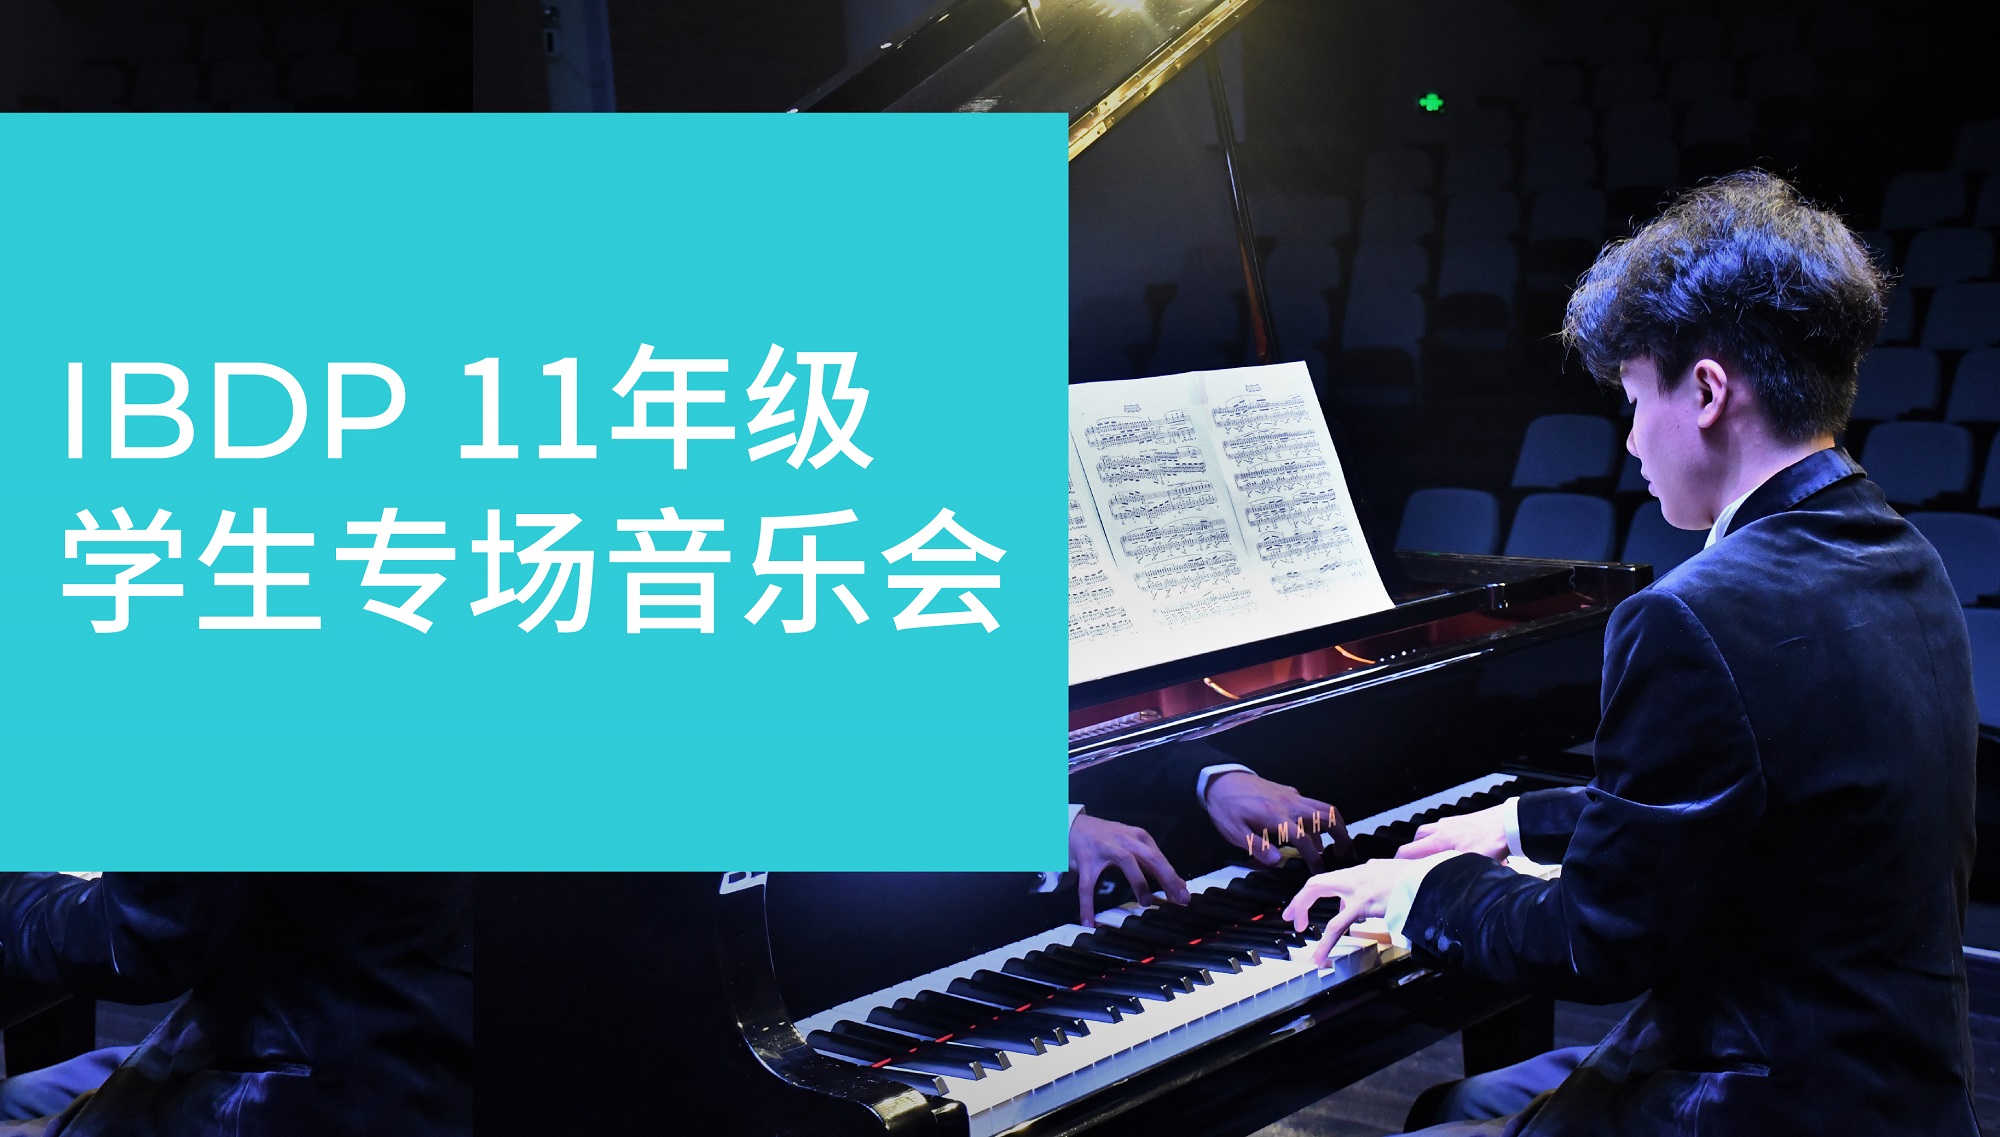 IBDP 11年级学生专场演奏会 - IBDP Concert